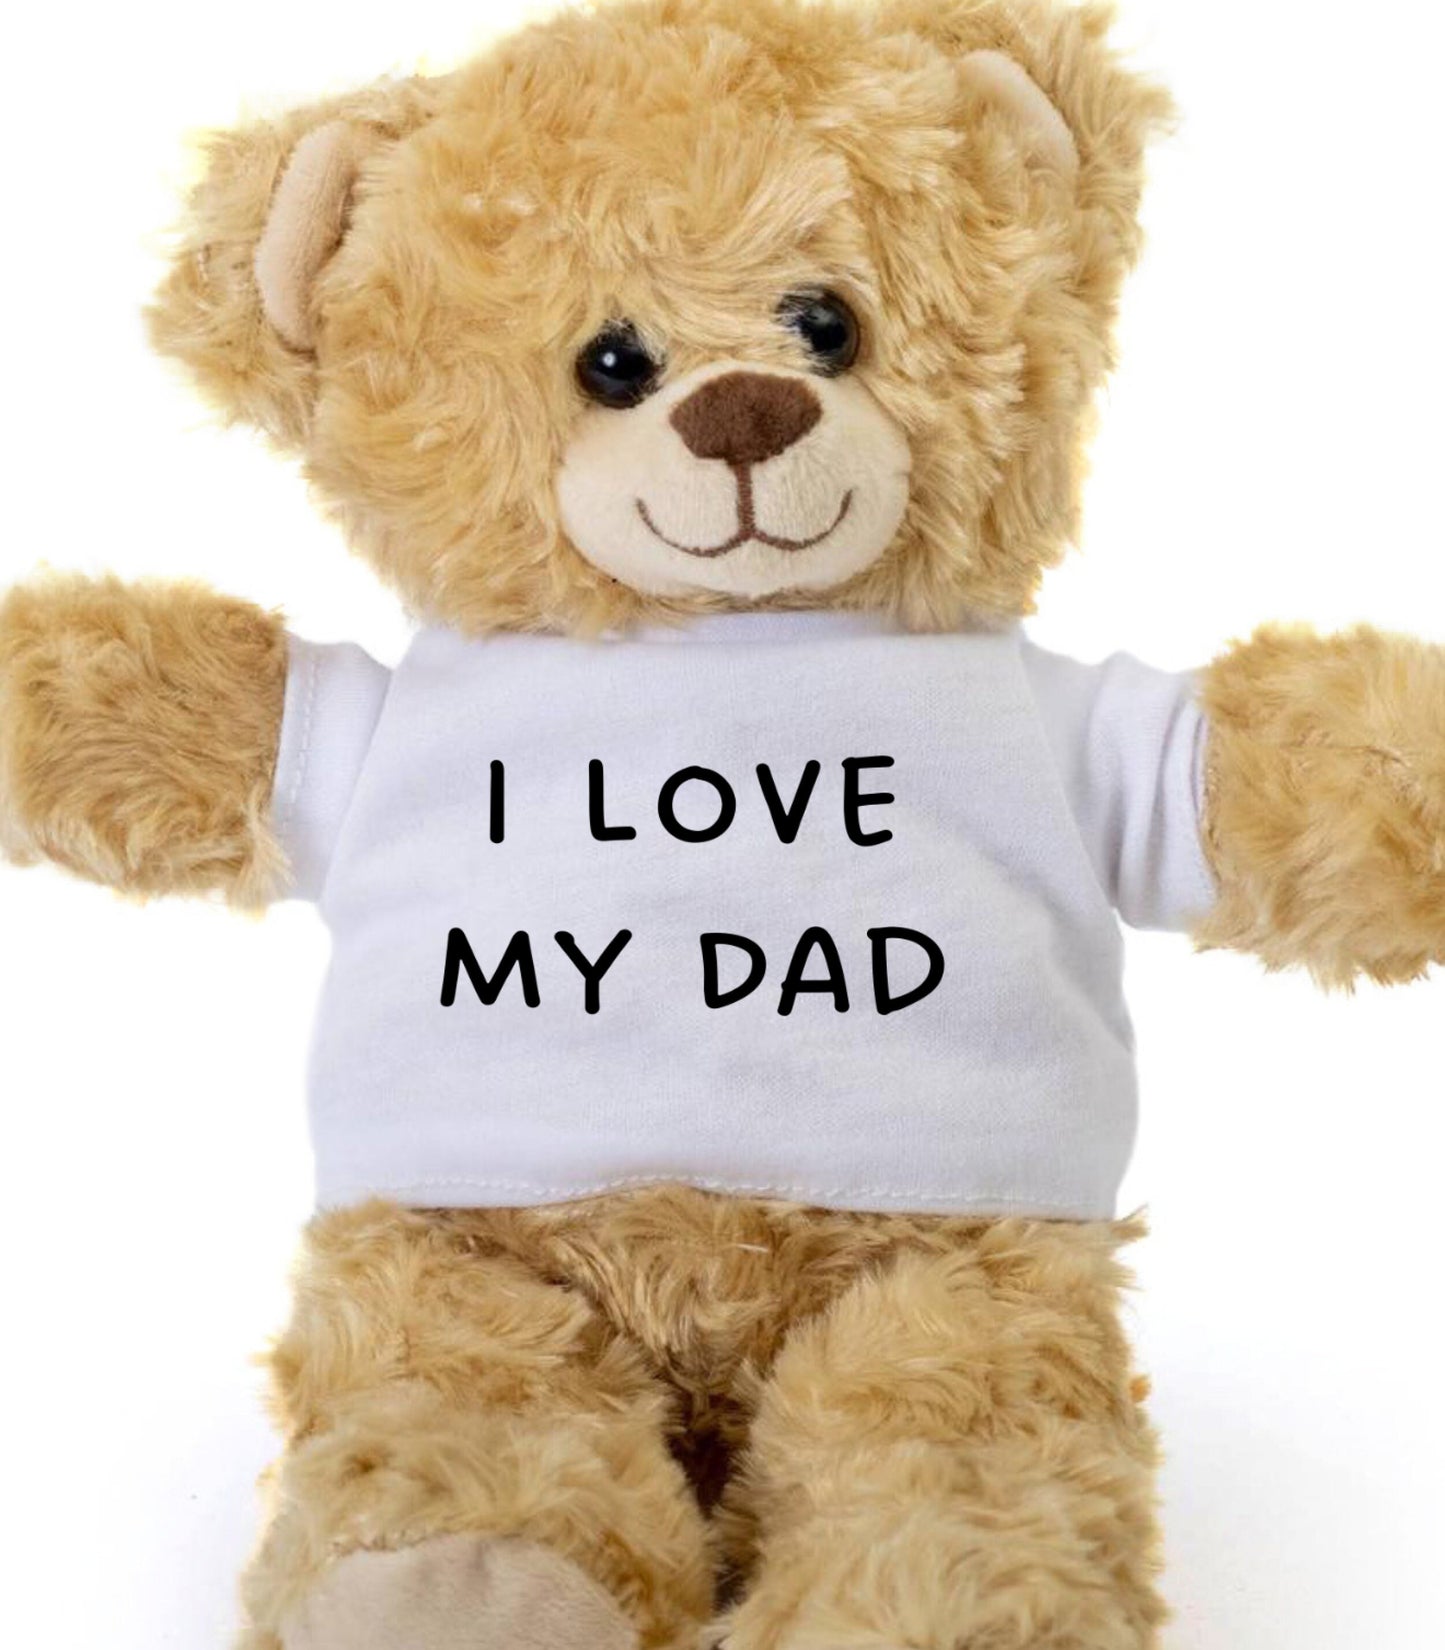 Teddy Bear For Dad From Child, Teddy Bear Set, Father's Day Gift Ideas, Custom Teddy Bear, Gift for Dad, Gift For Bonus Dad, Dad Gift